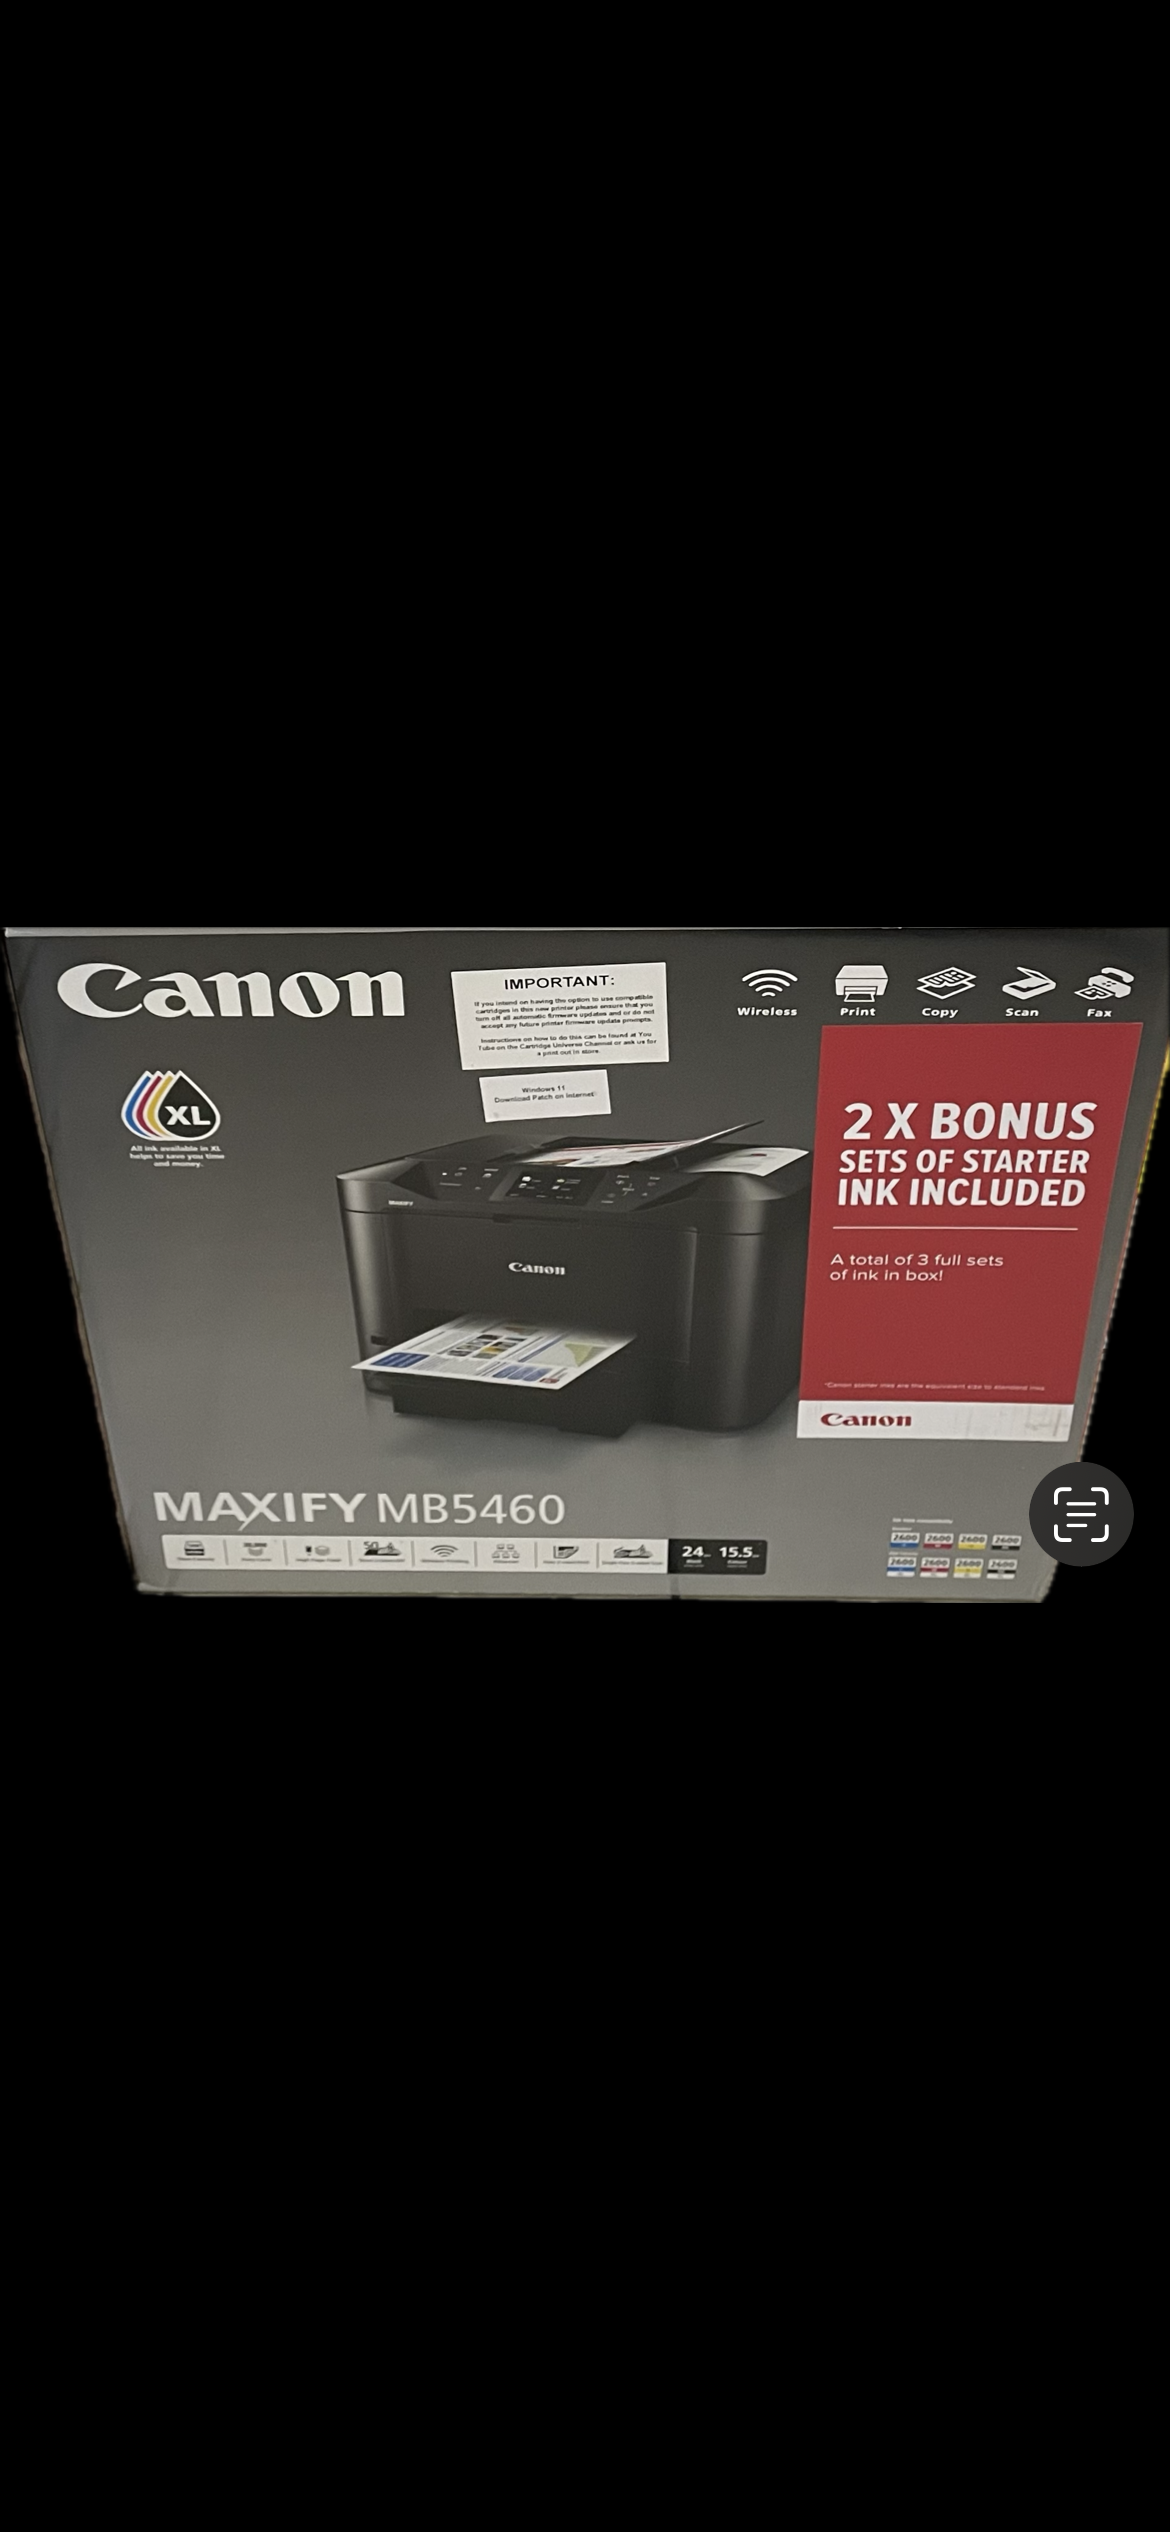 affordable canon printer for multitasking